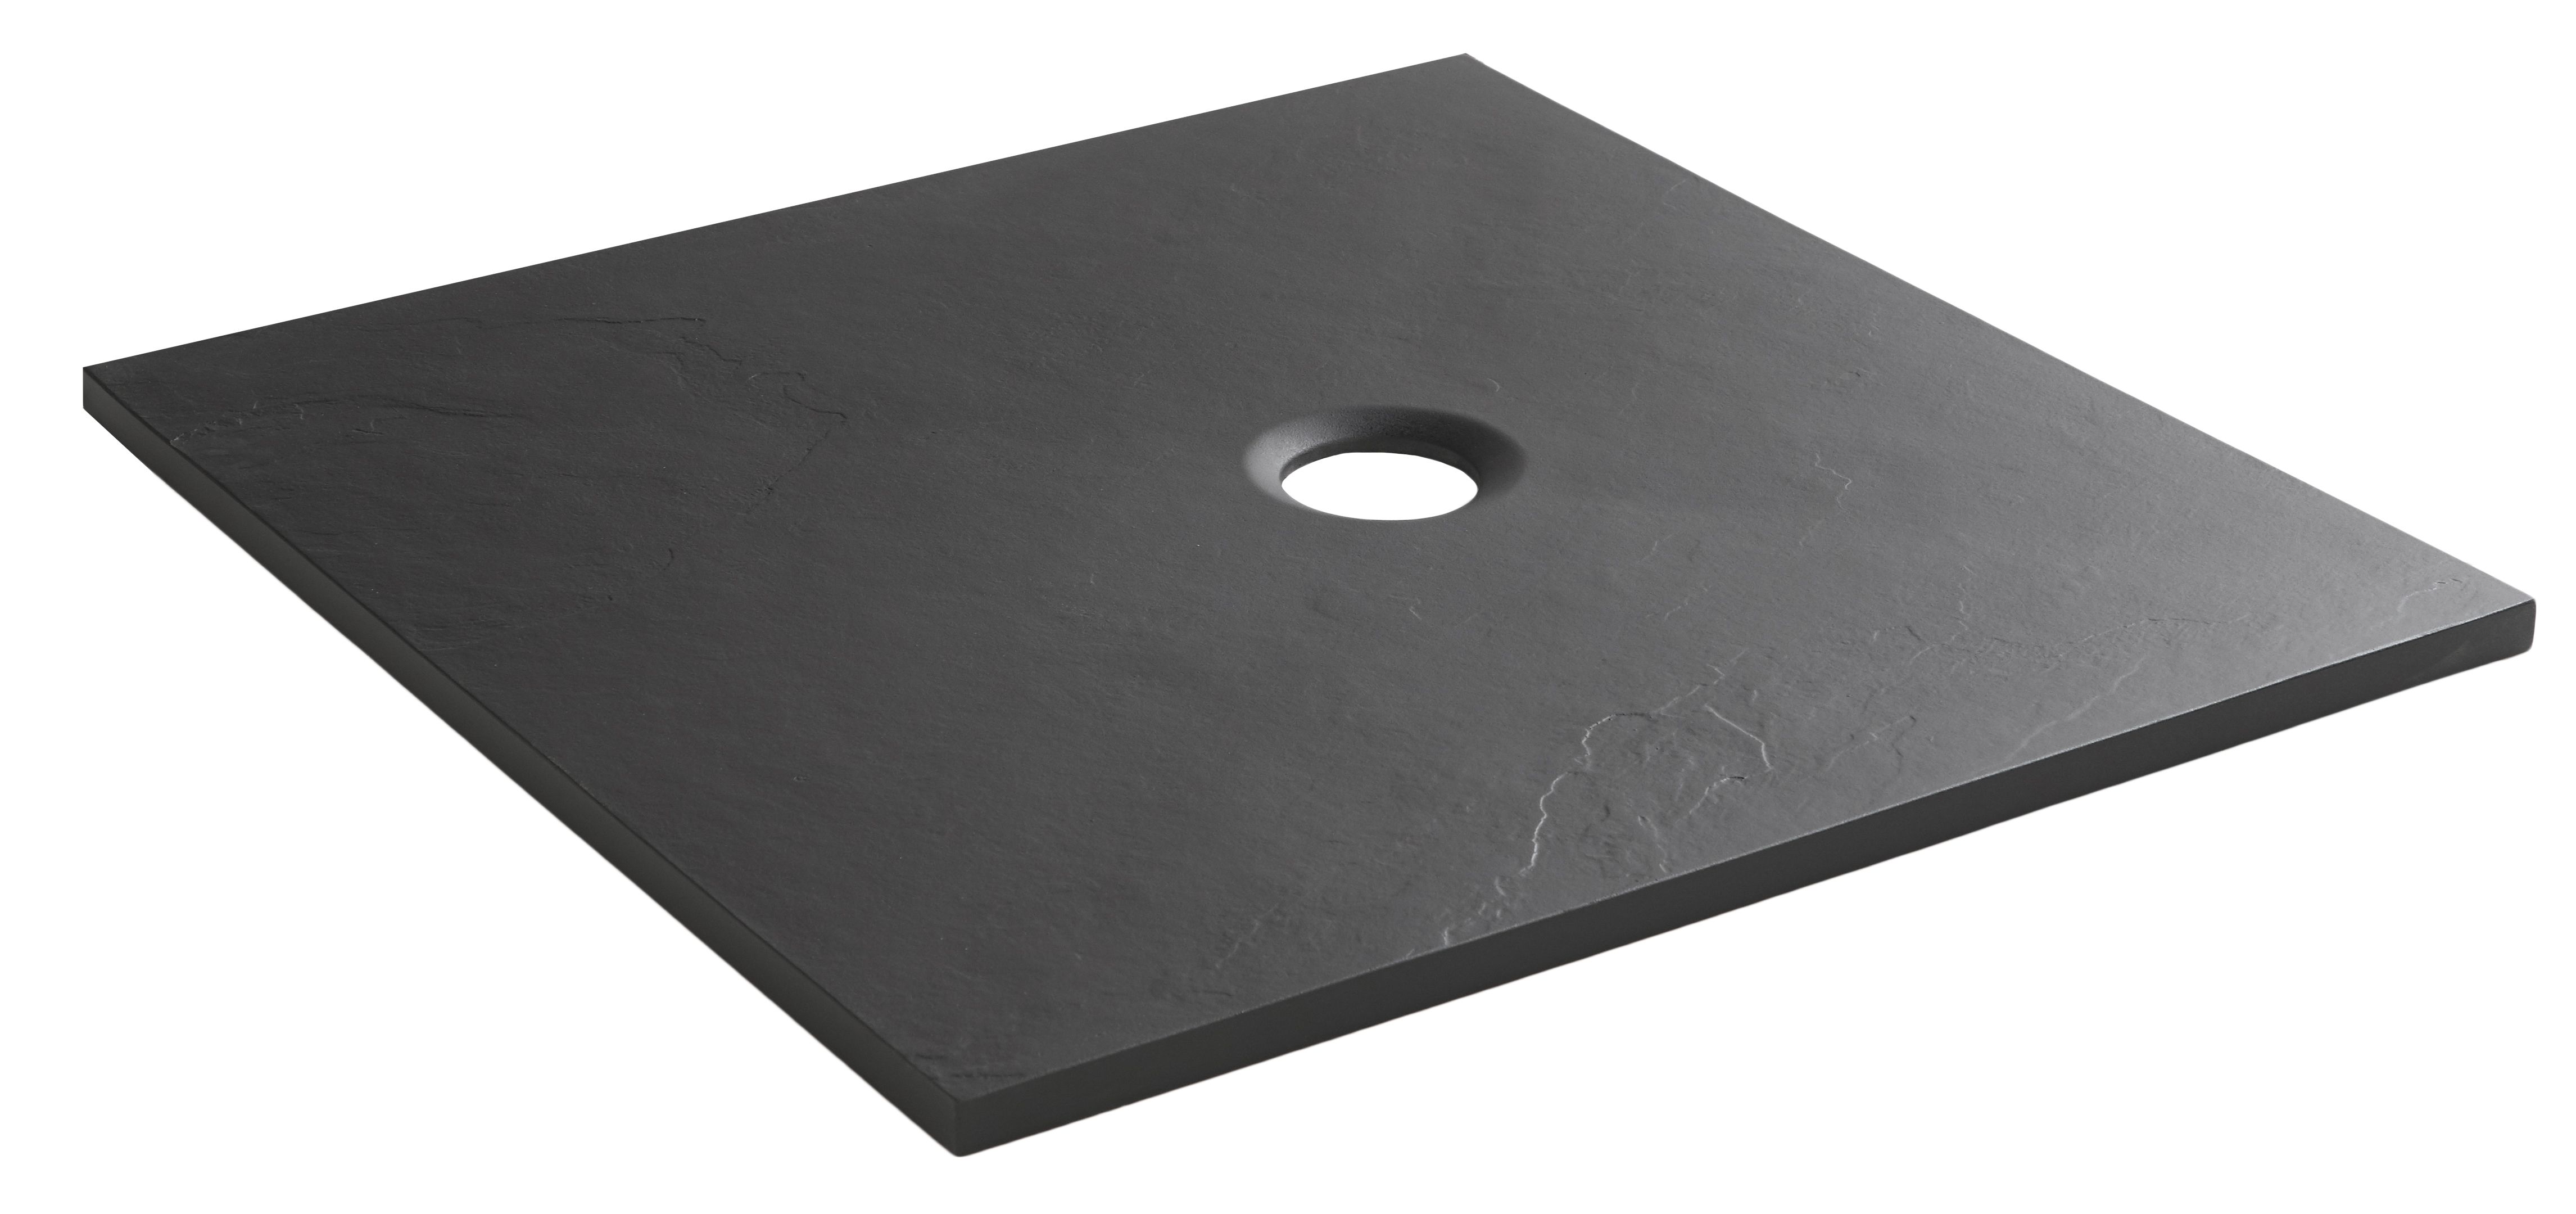 Cooke & Lewis Piro Black Square Shower tray (L)90cm (W)90cm (H)2.7cm